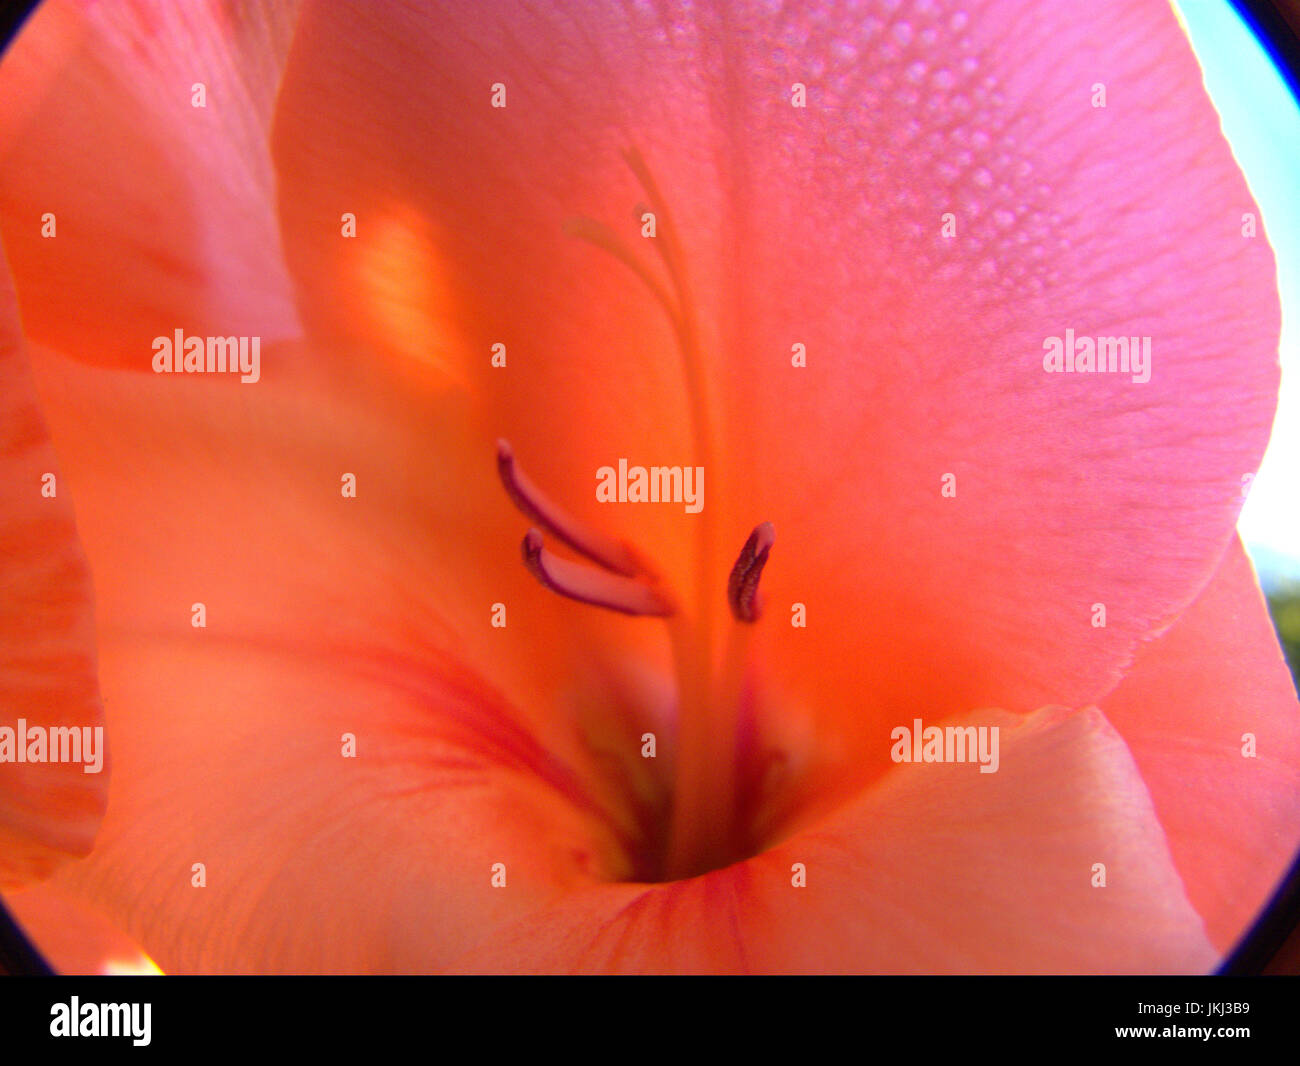 Salmon pink gladiolus flower Stock Photo - Alamy